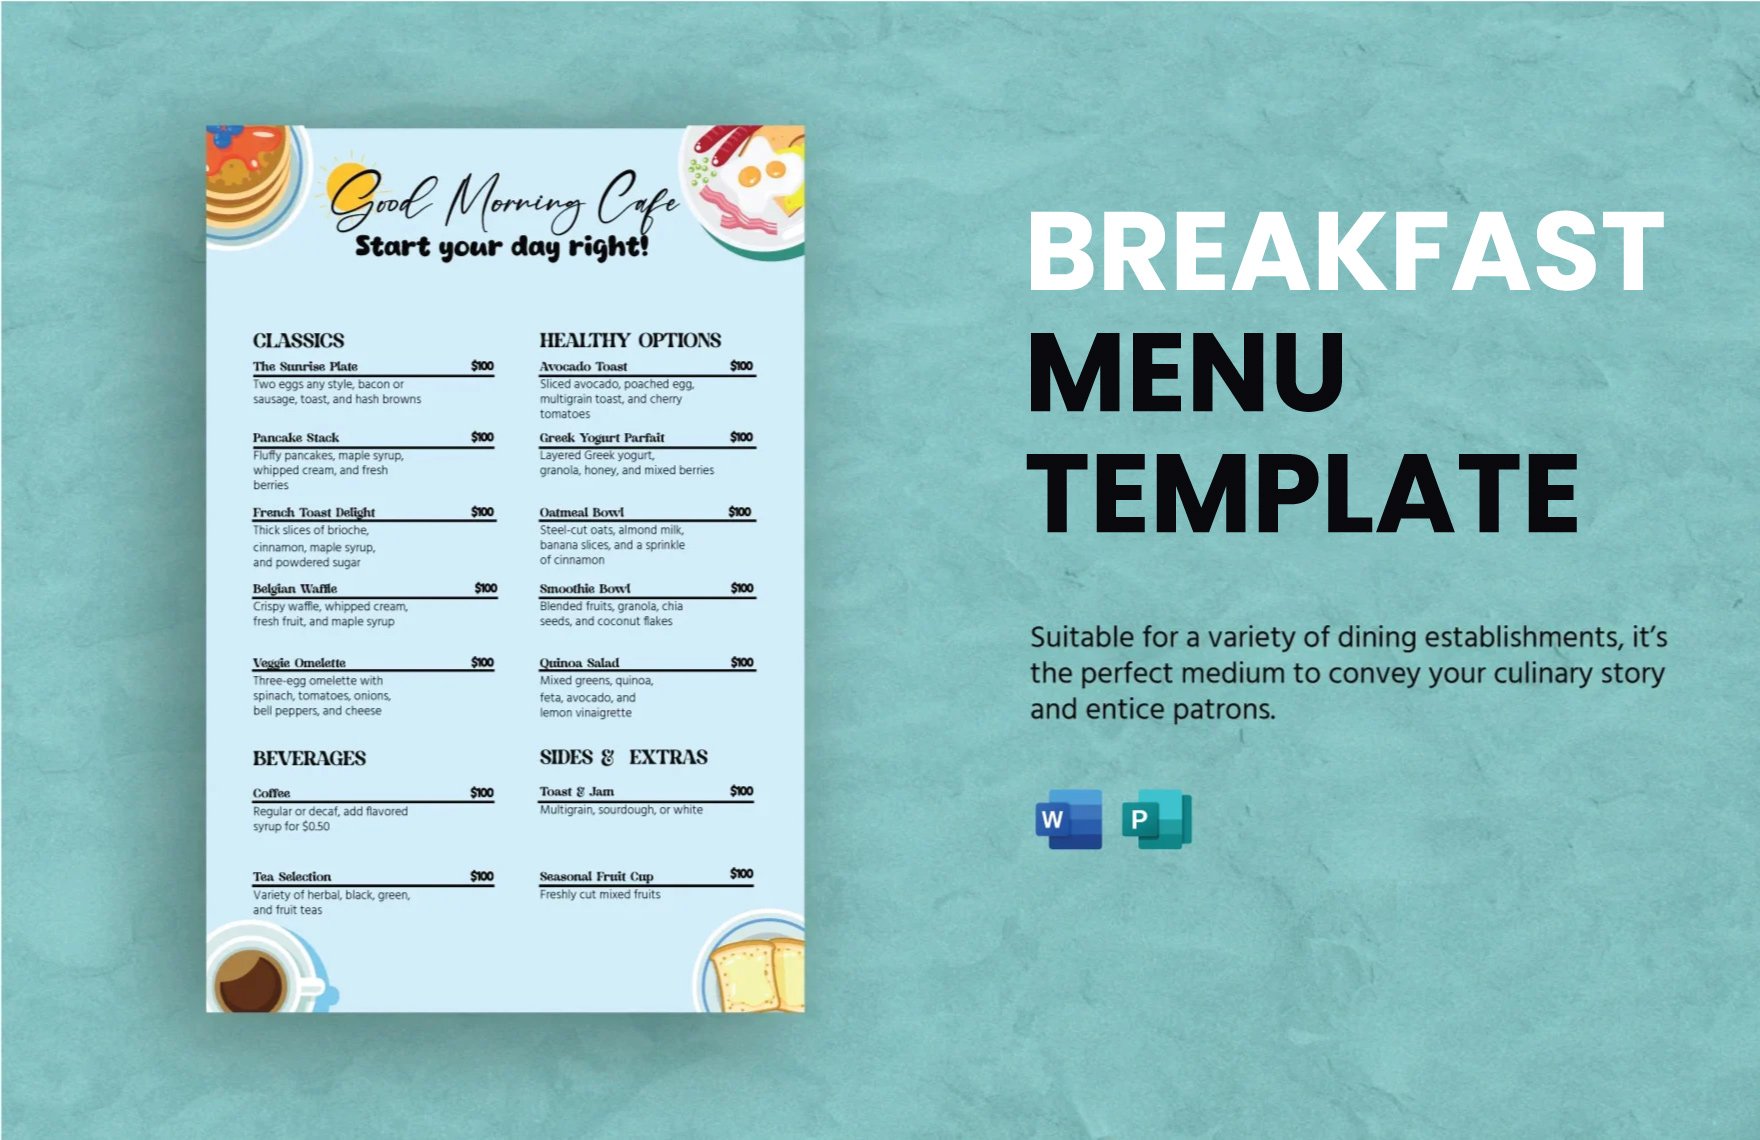 Free Breakfast Menu Template in Word, Publisher